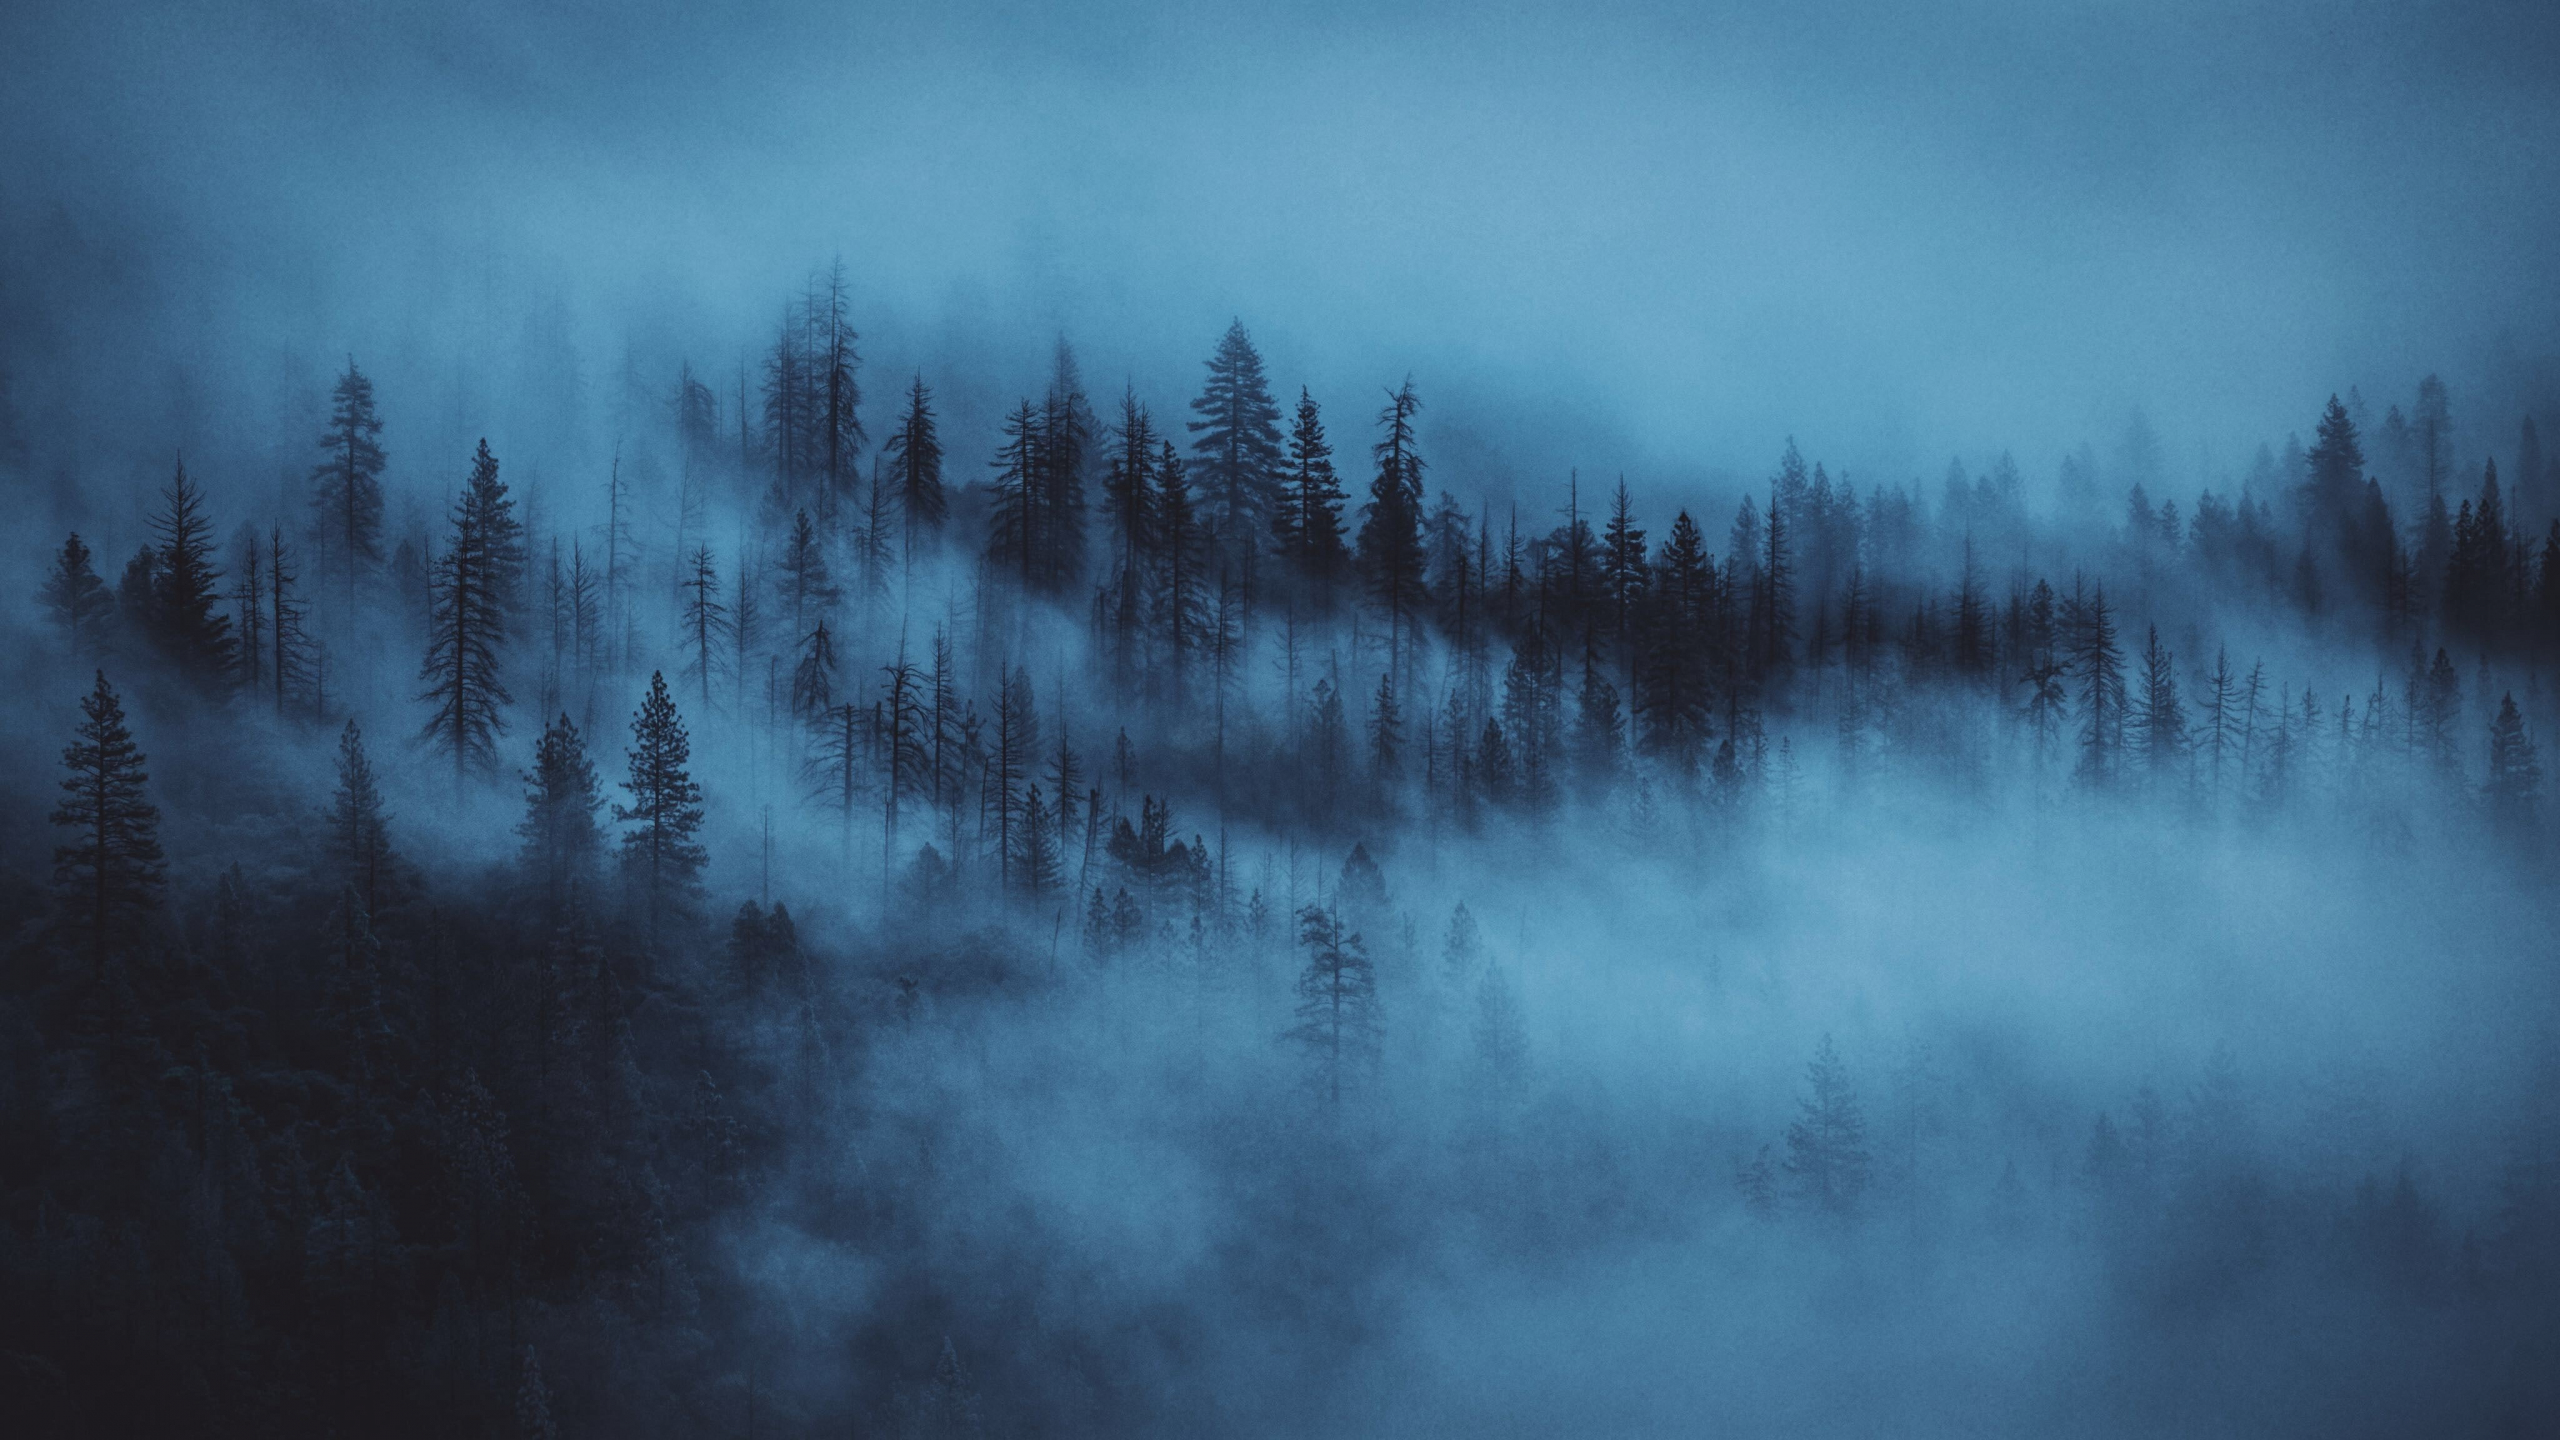 Download 2560x1440 Wallpaper Dark Mist Trees Forest Dual Wide